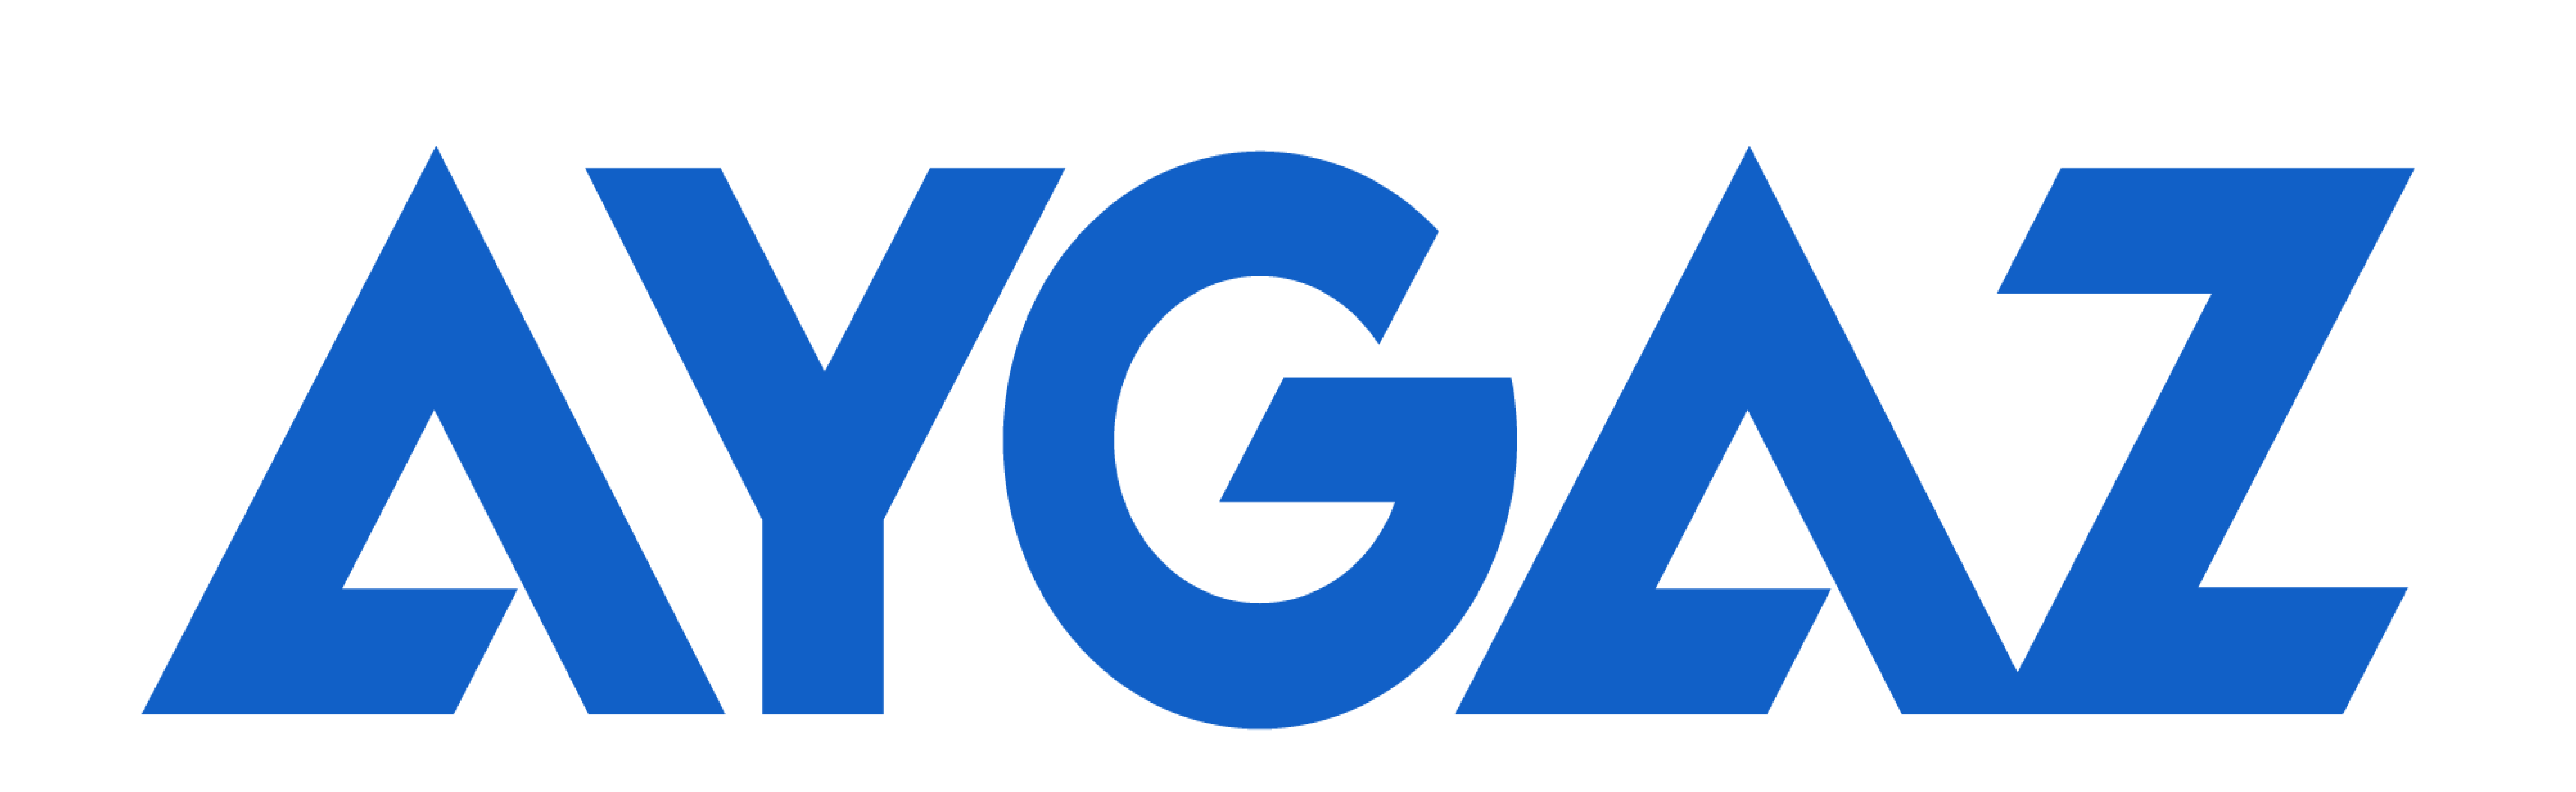 Logo Aygaz Png - Aygaz, Transparent background PNG HD thumbnail